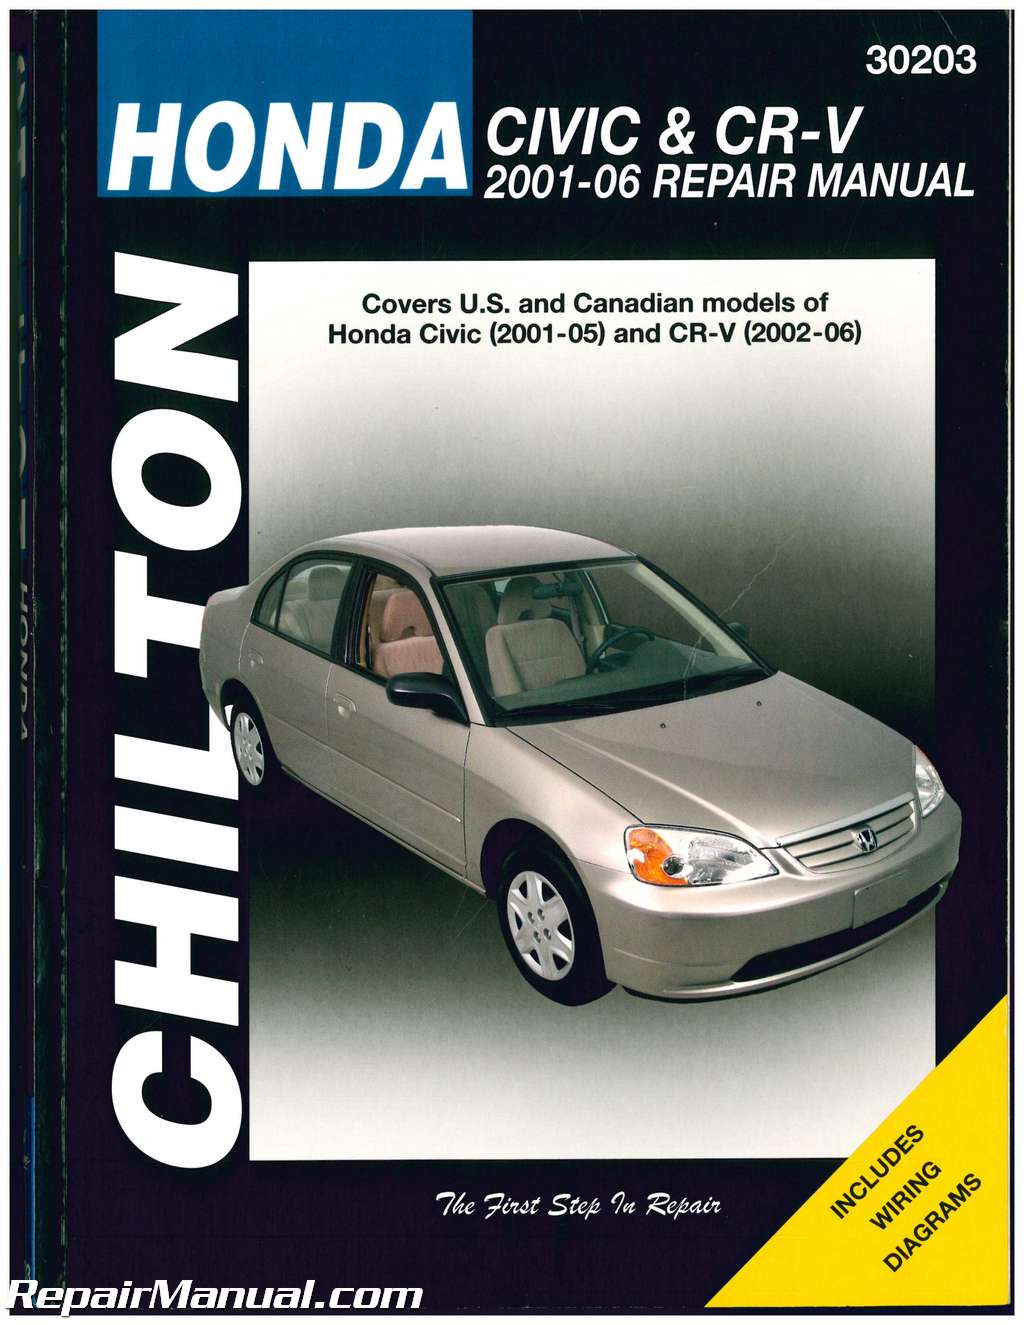 Honda civic service manual pdf